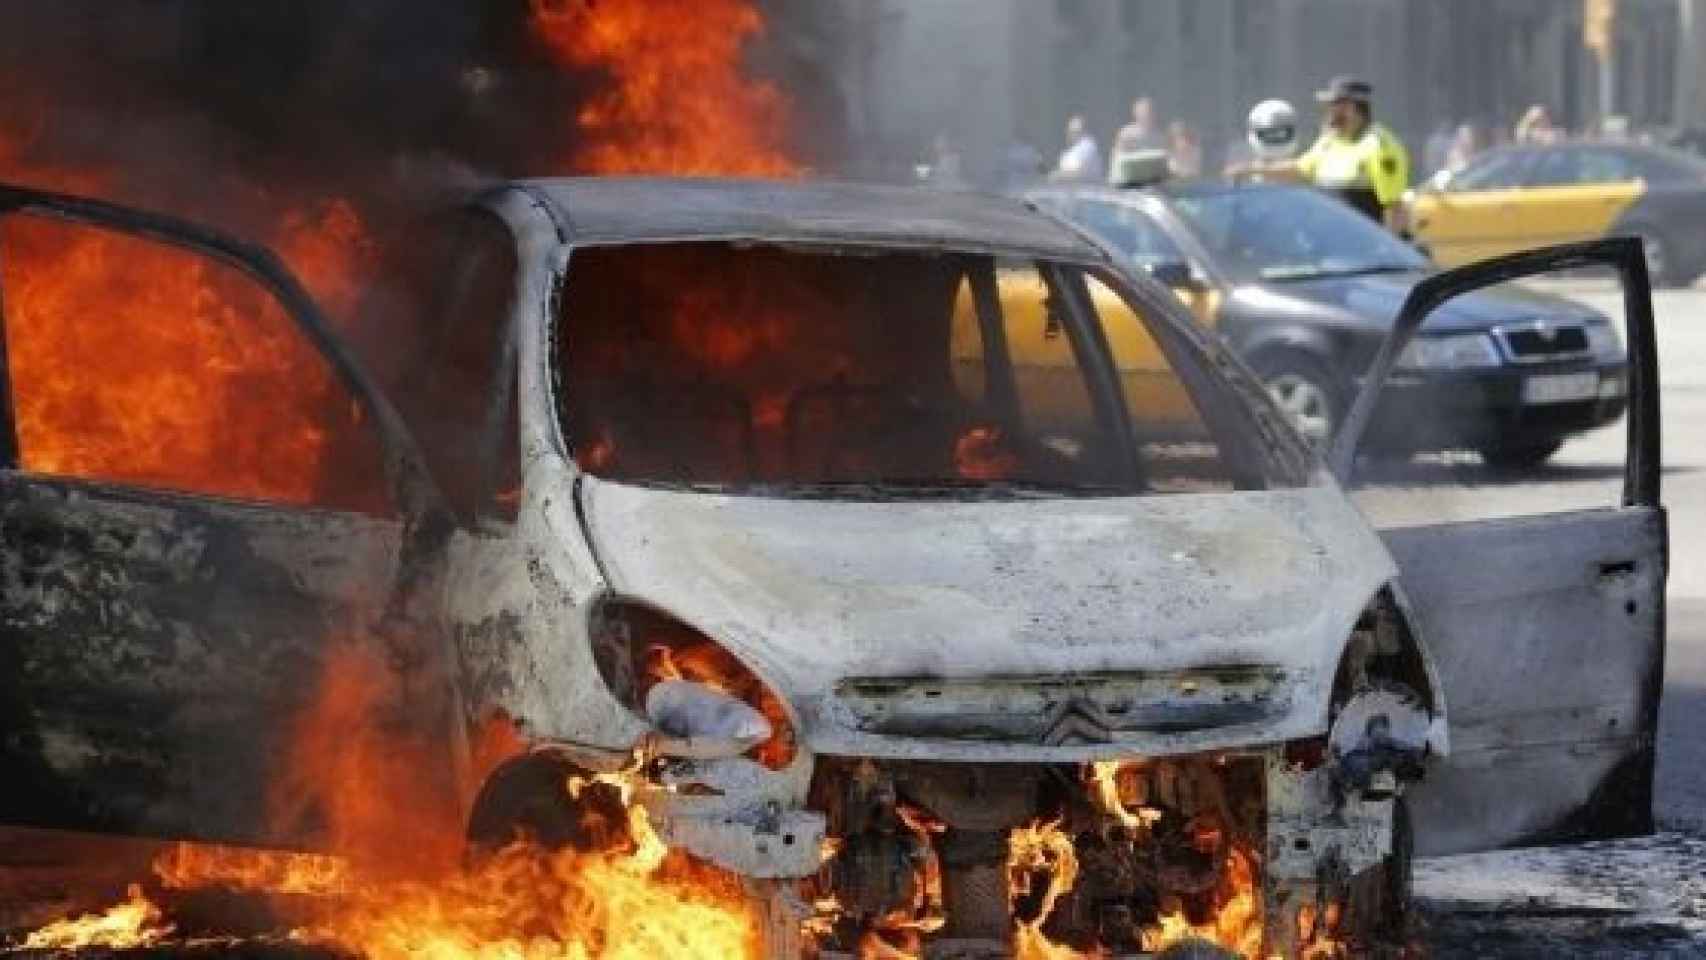 Un coche ardiendo, imagen de archivo / TWITTER